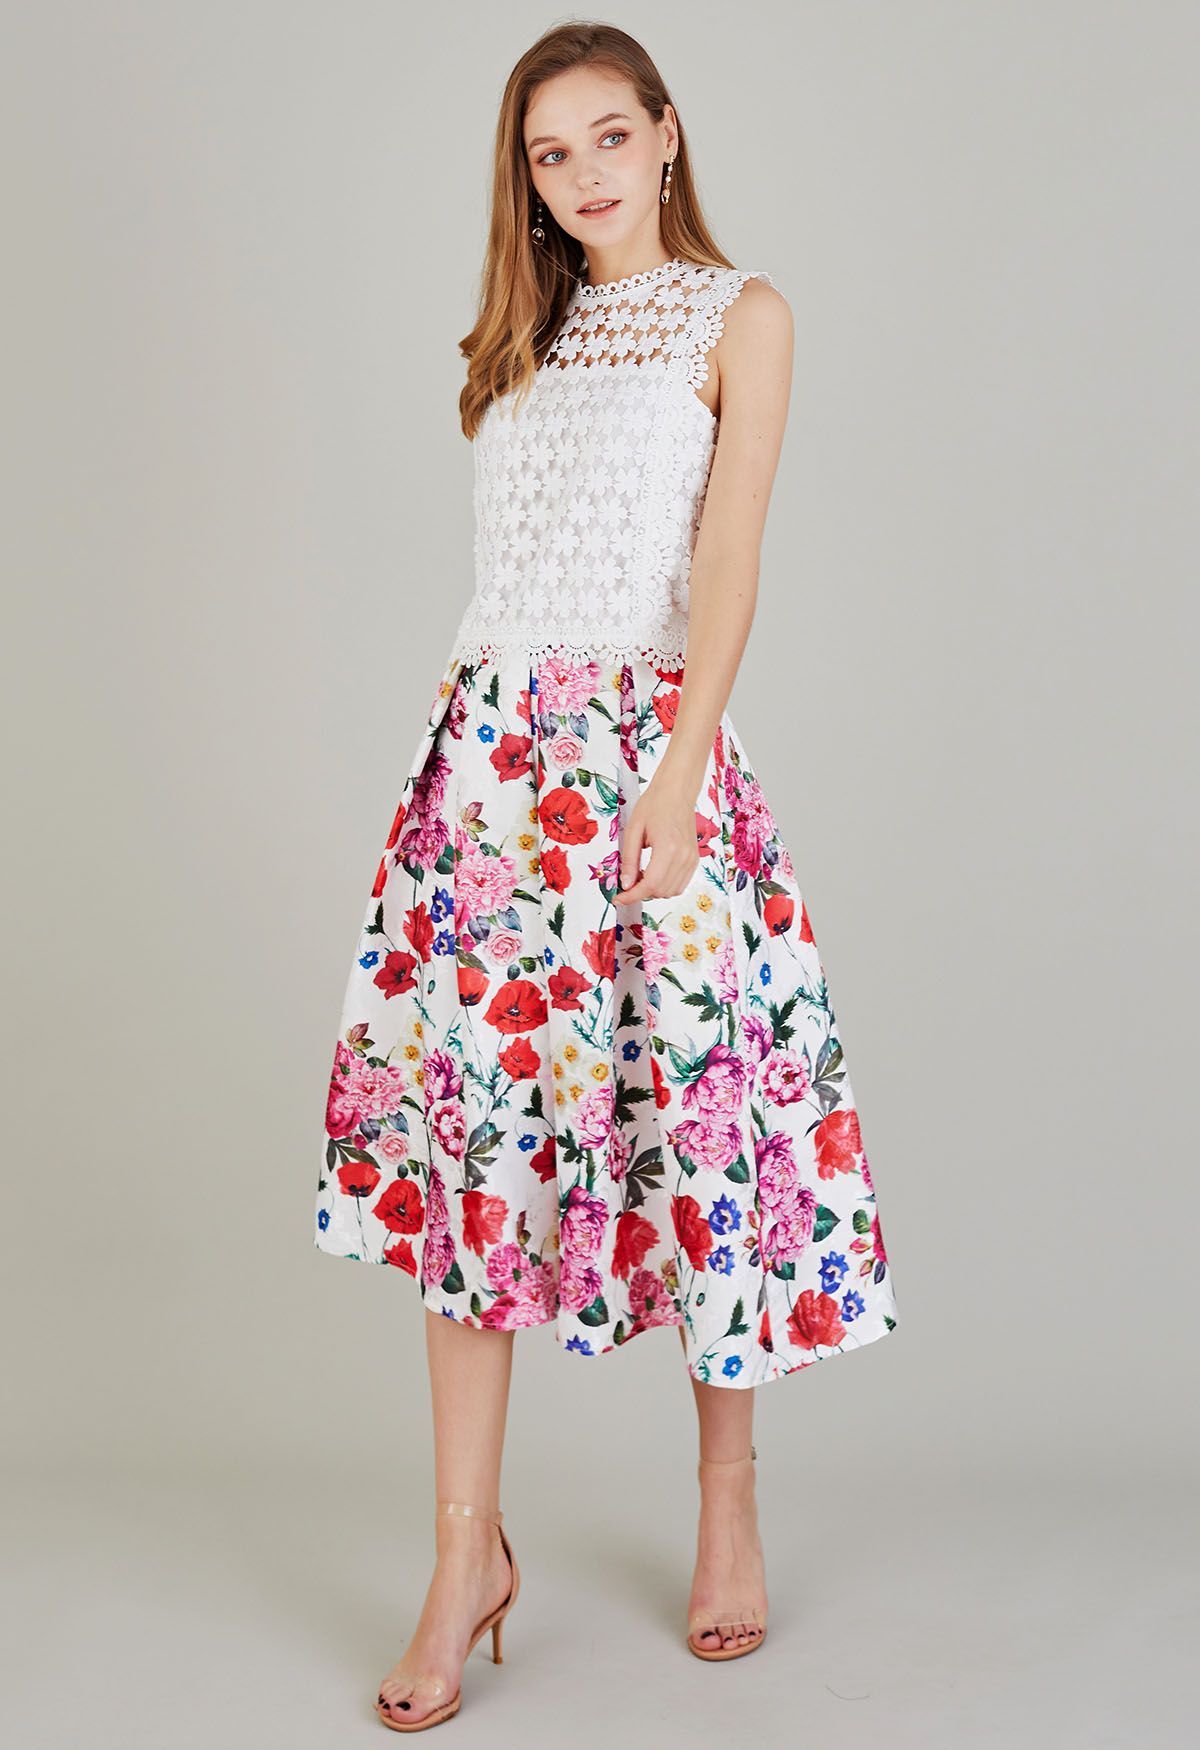 Blossom Bliss Jacquard Pleated Midi Skirt